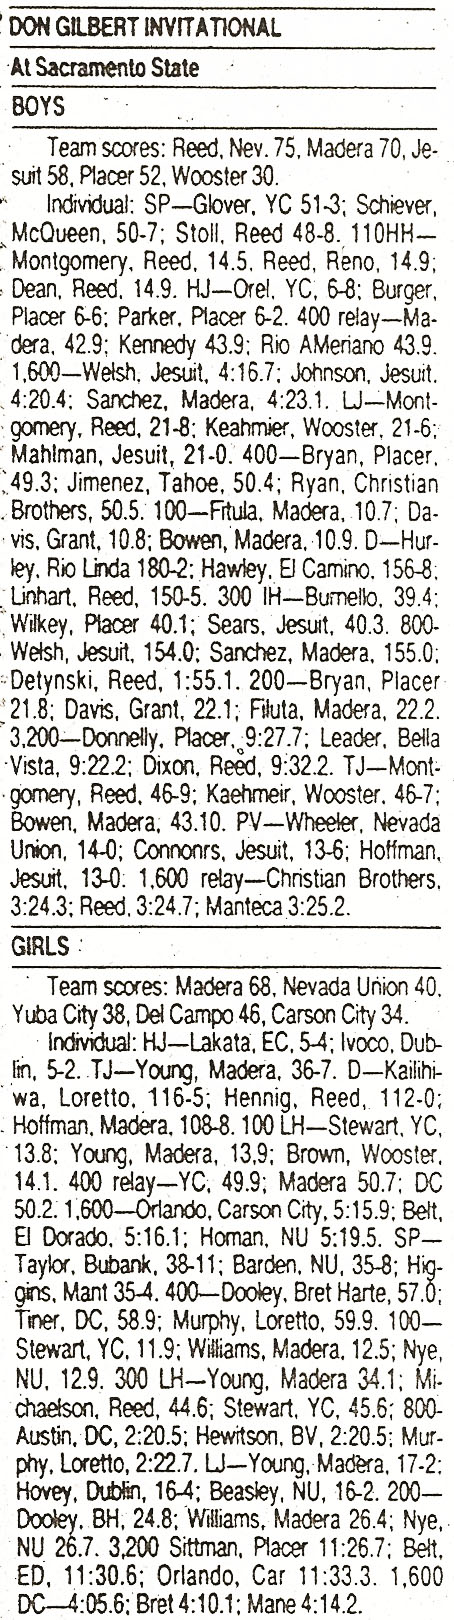 1989 Don Gilbert Invitational Results